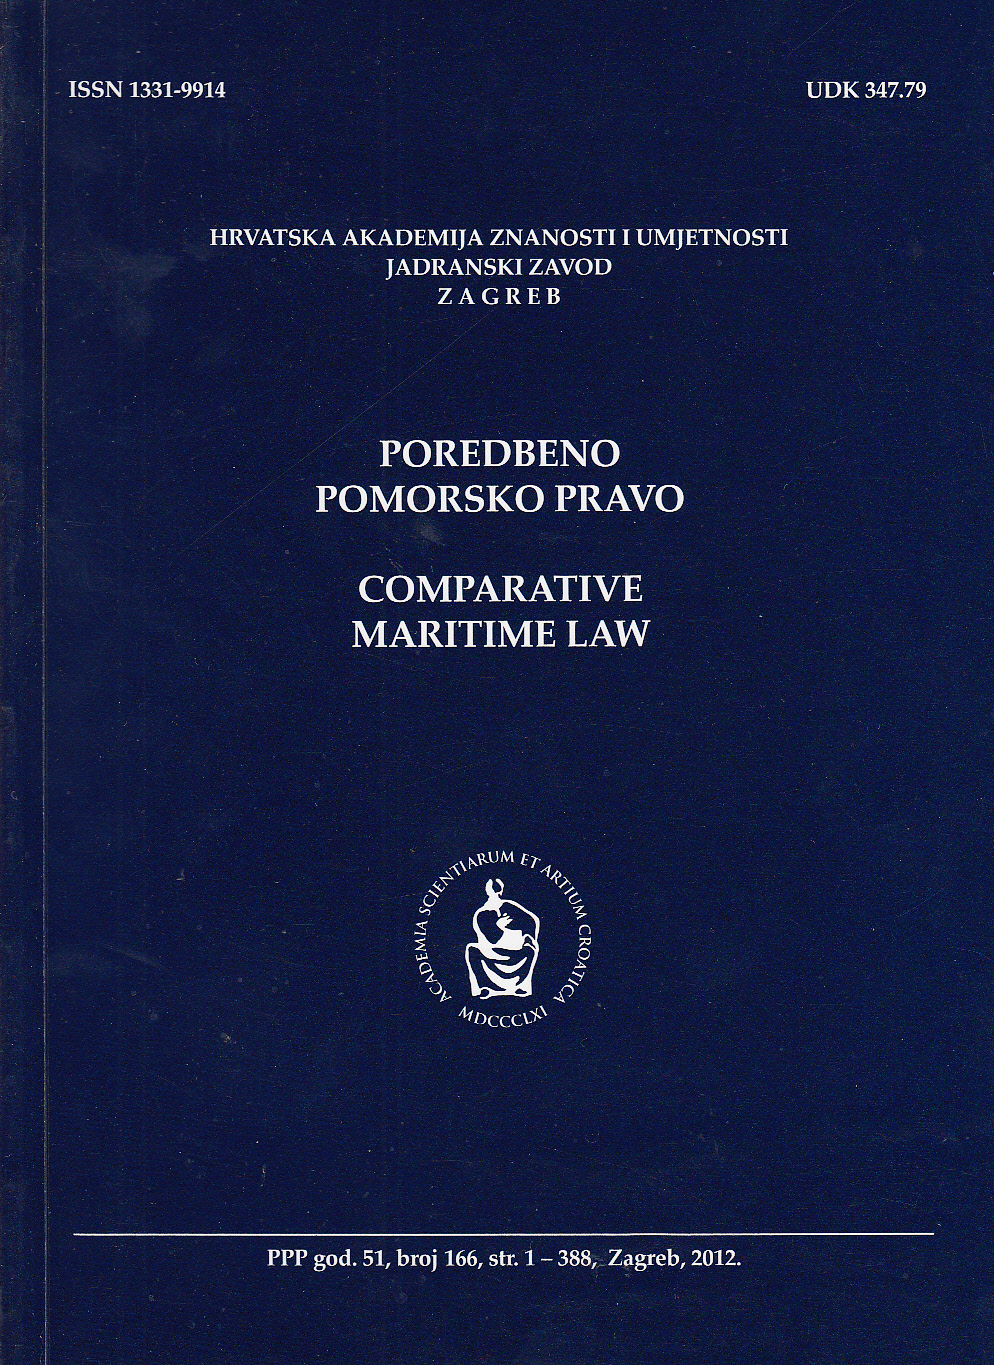 Ship arrest in the Croatian law : De lege lata and de lege ferenda solutions Cover Image